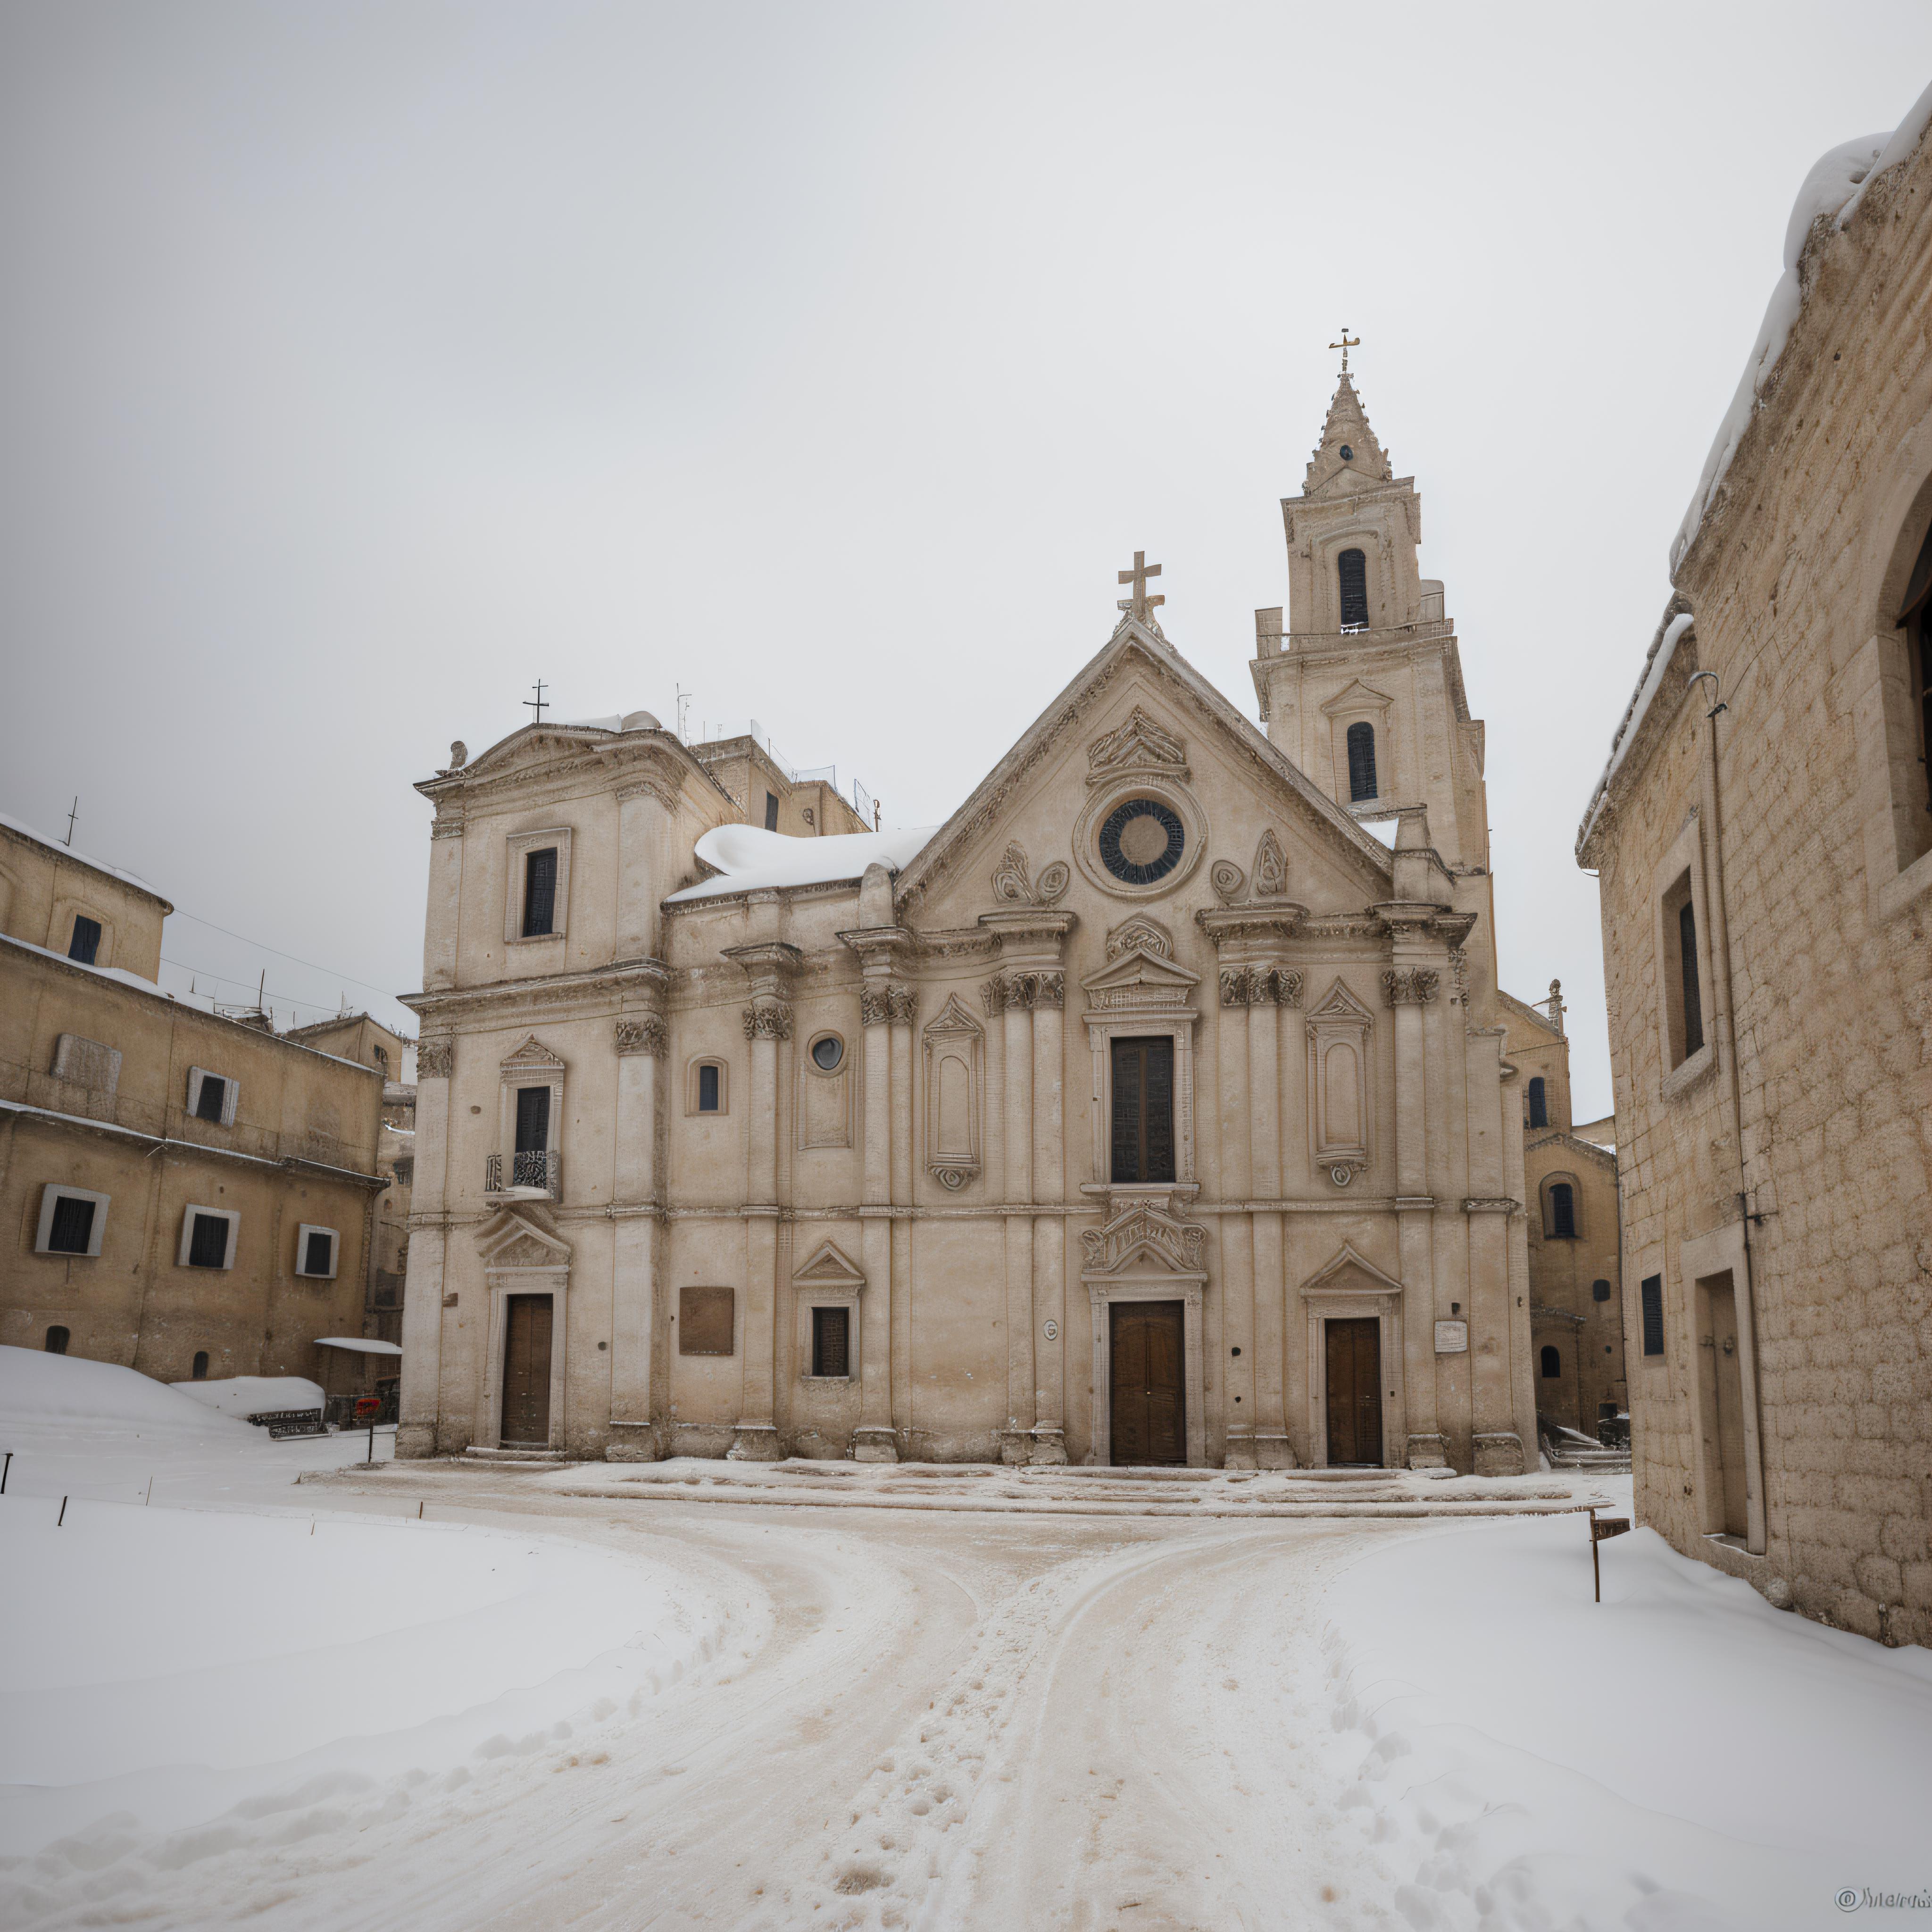 Matera city of Sassi - Italian ancient town image by Jentix